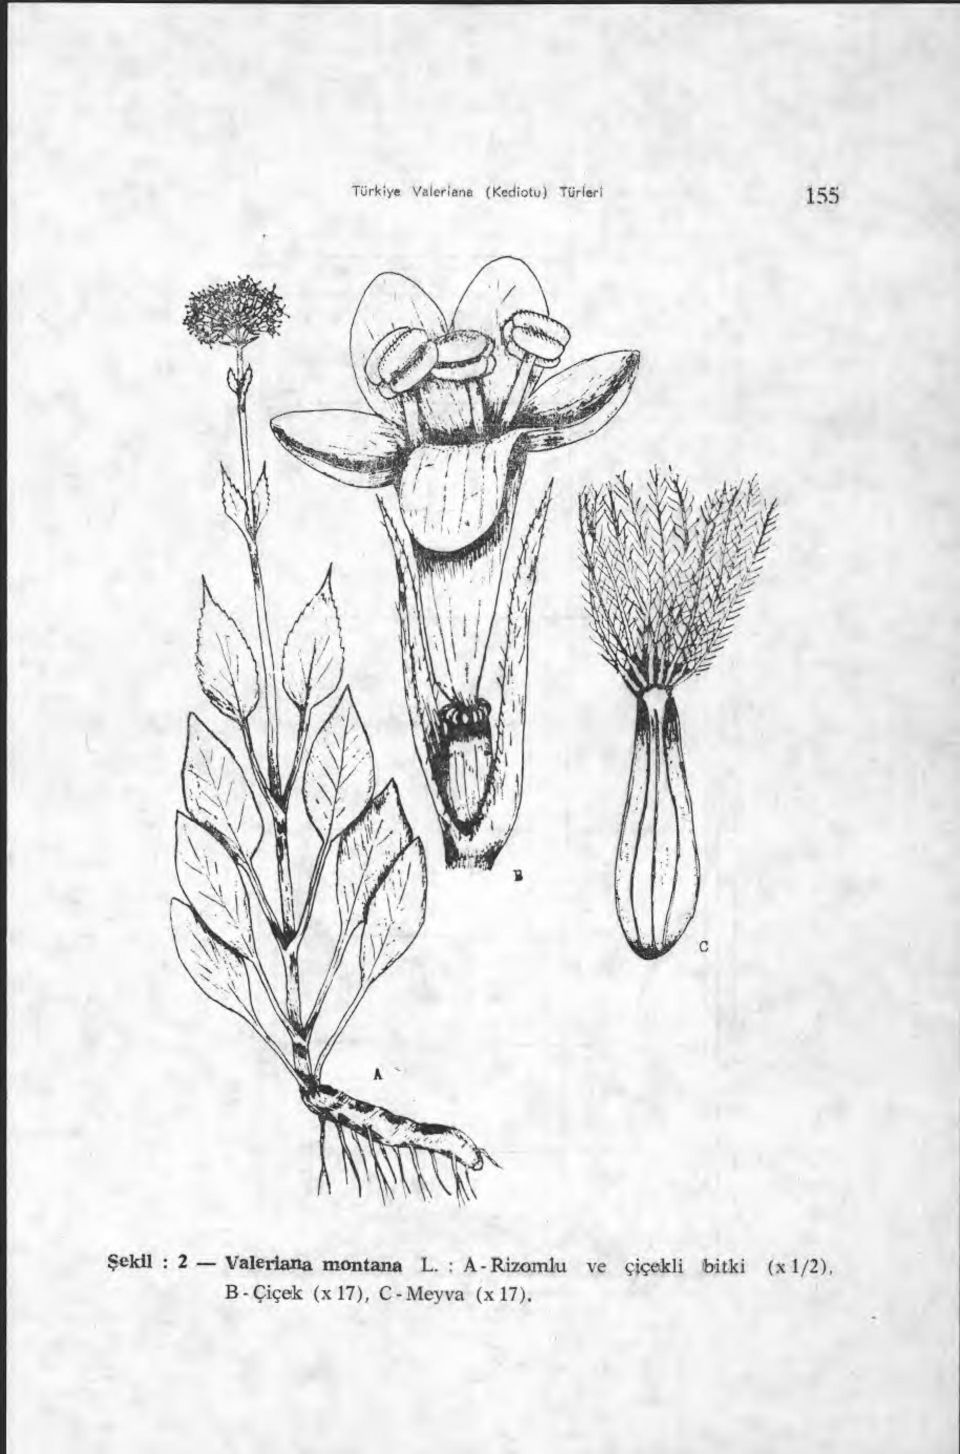 A - Rizorrilu ve çiçekli bitki (x